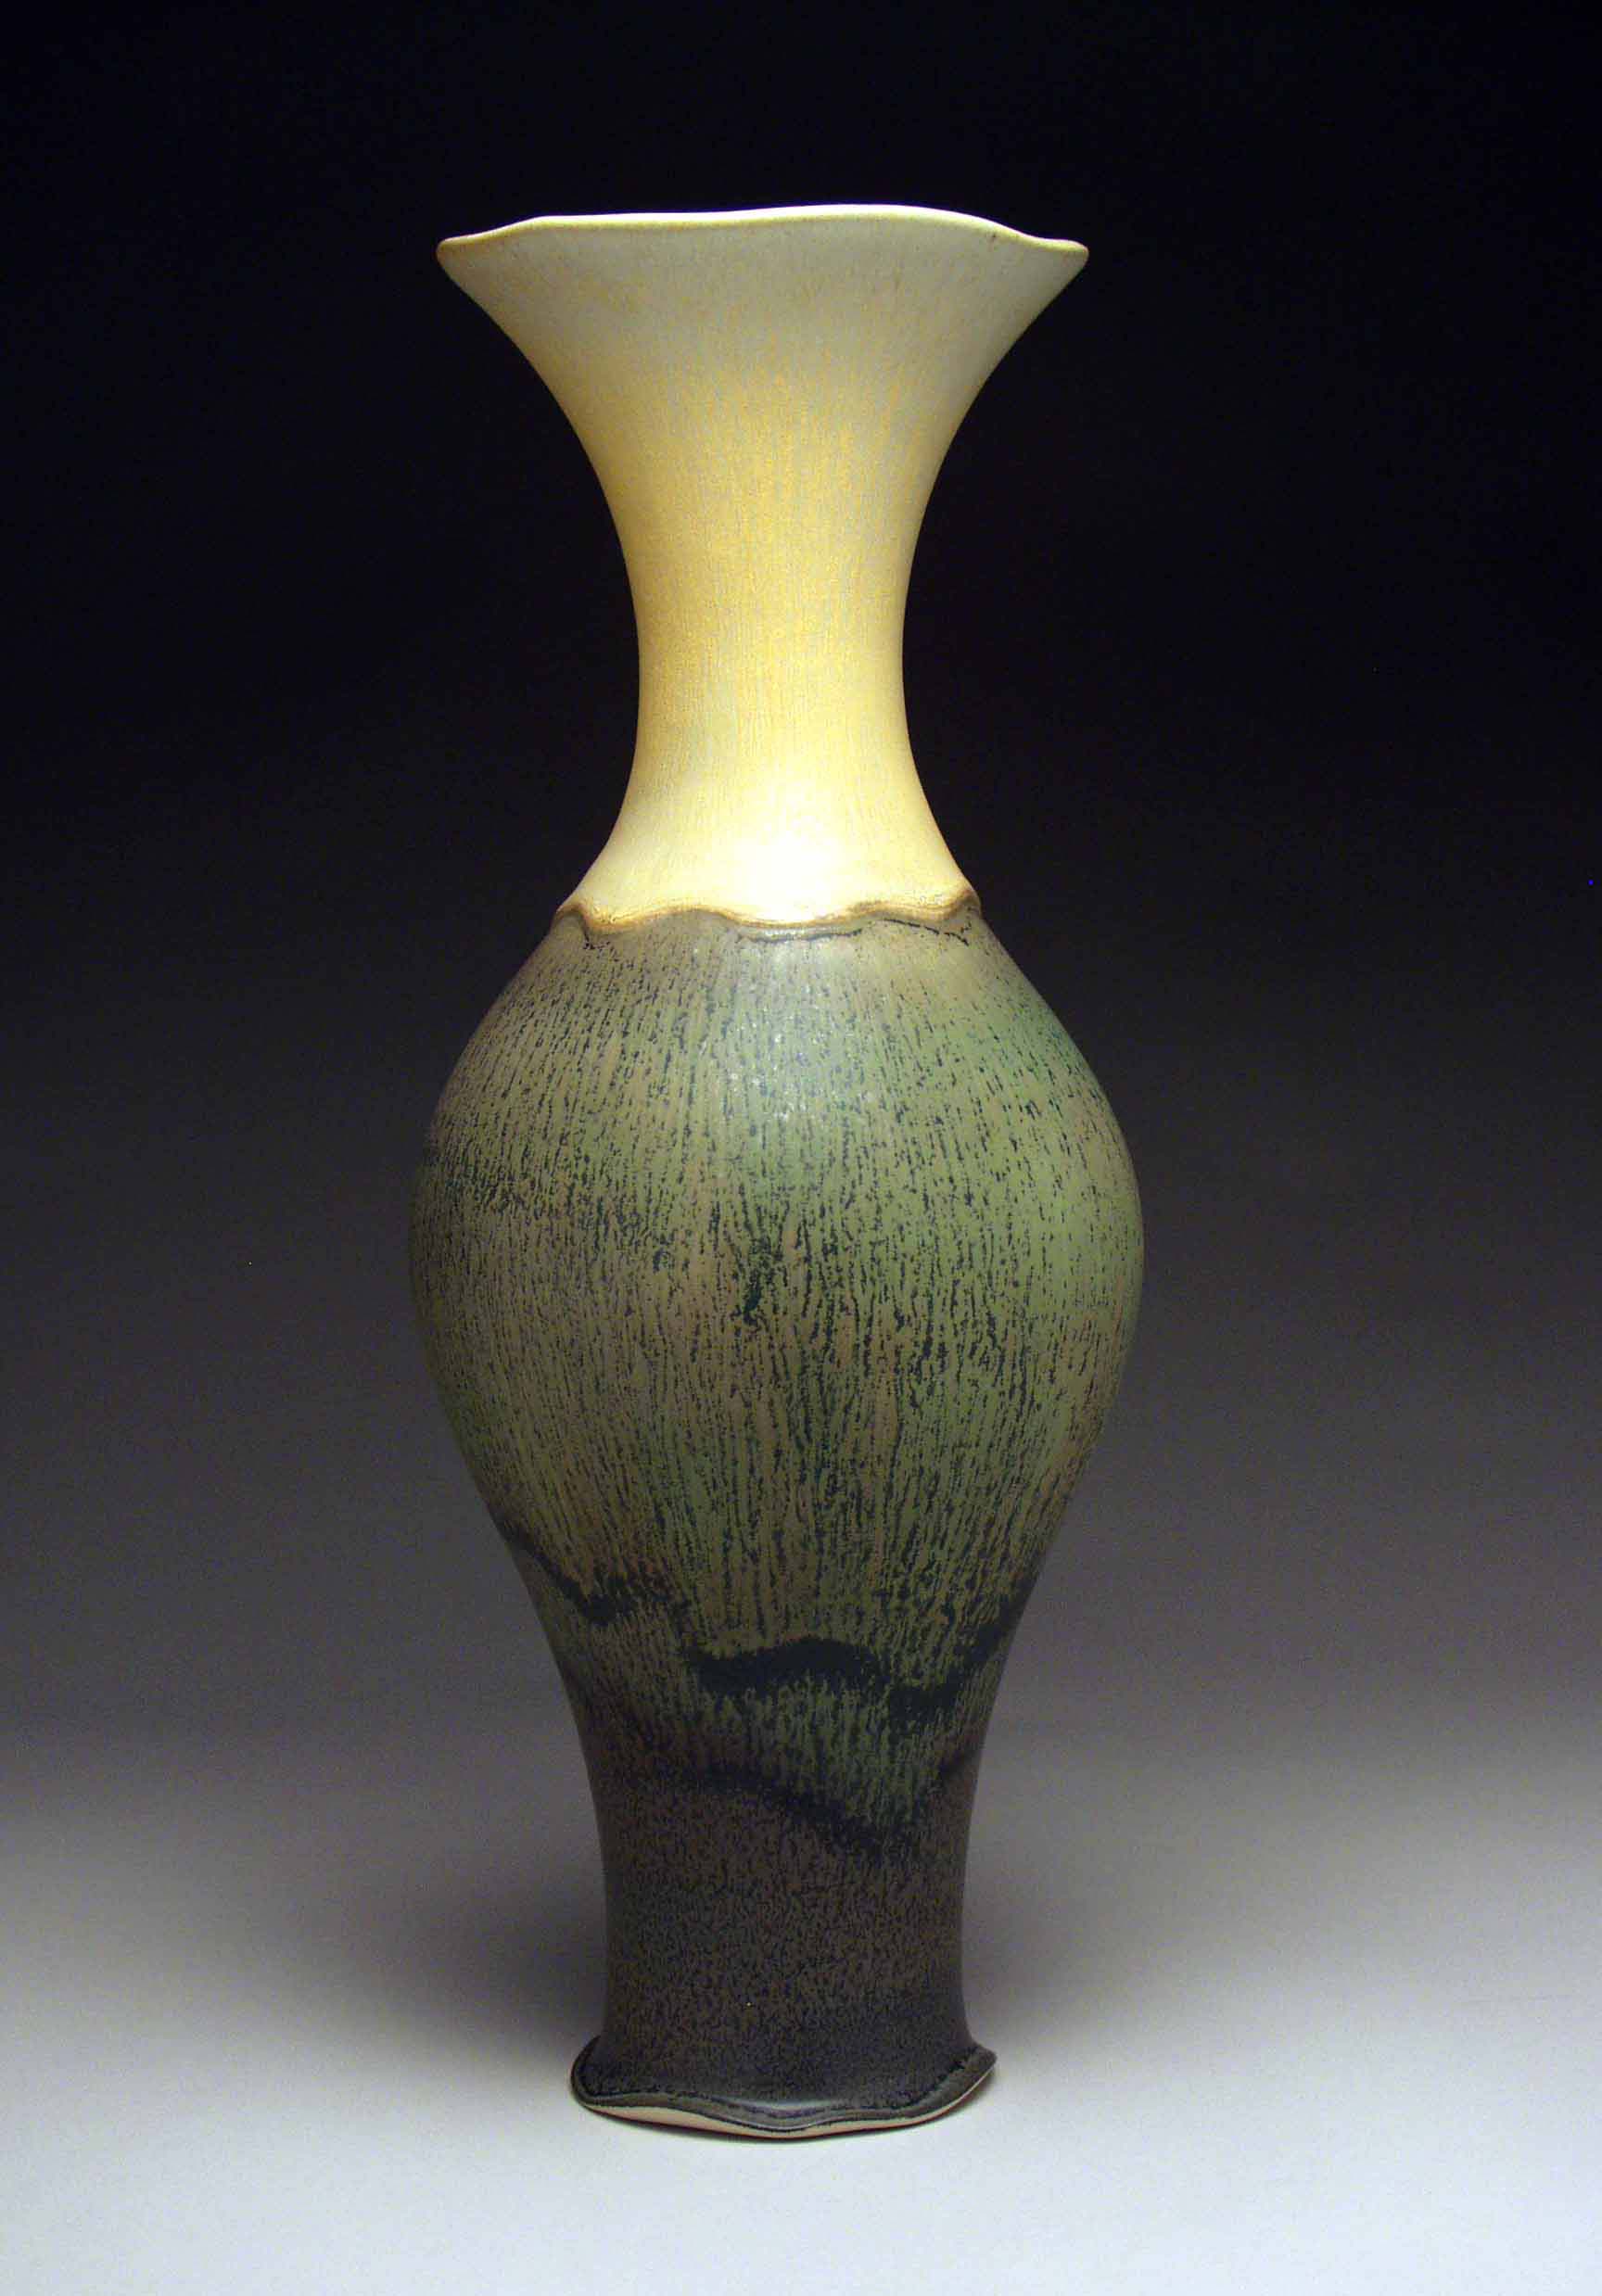 conner burns - tall green vase